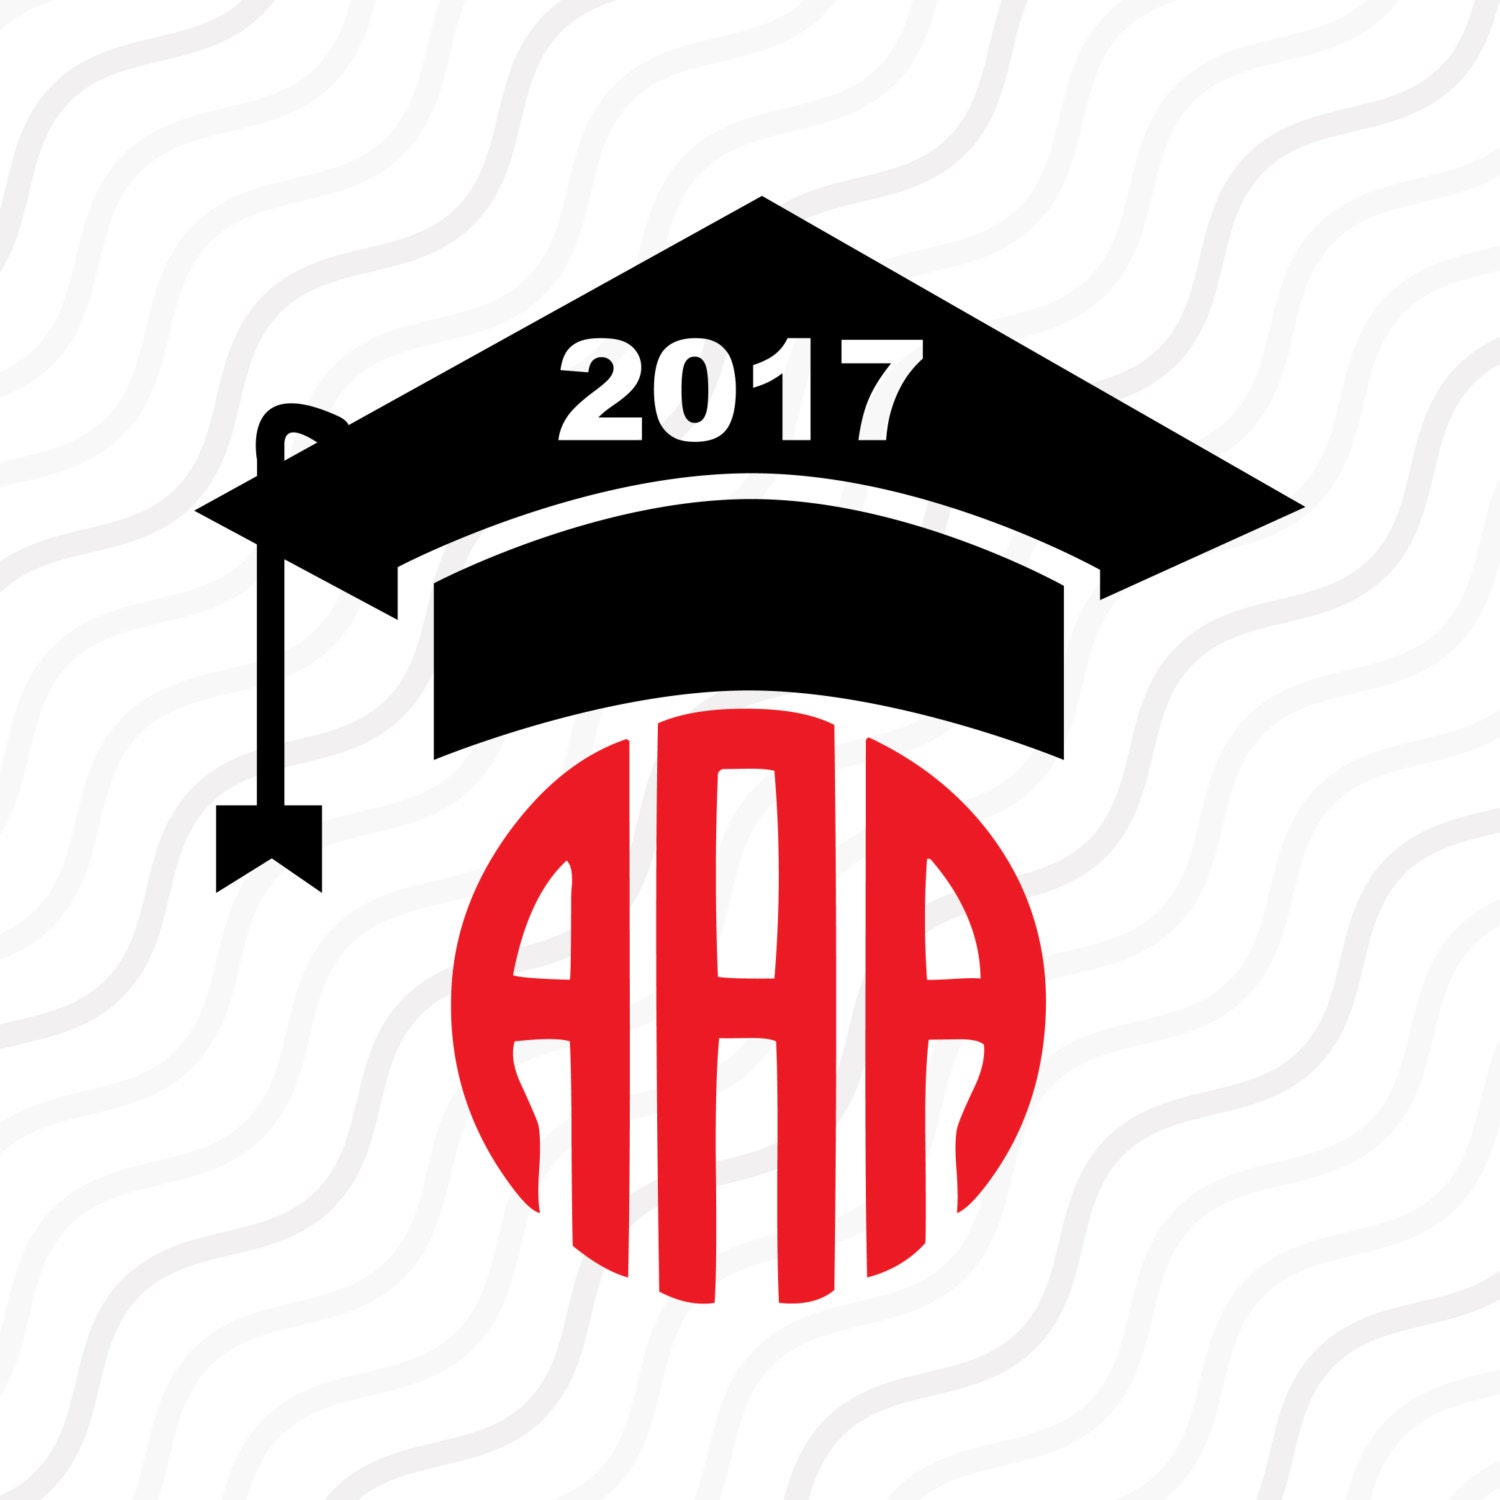 Graduation Cap SVG Graduation 2017 Monogram SVG Cut table